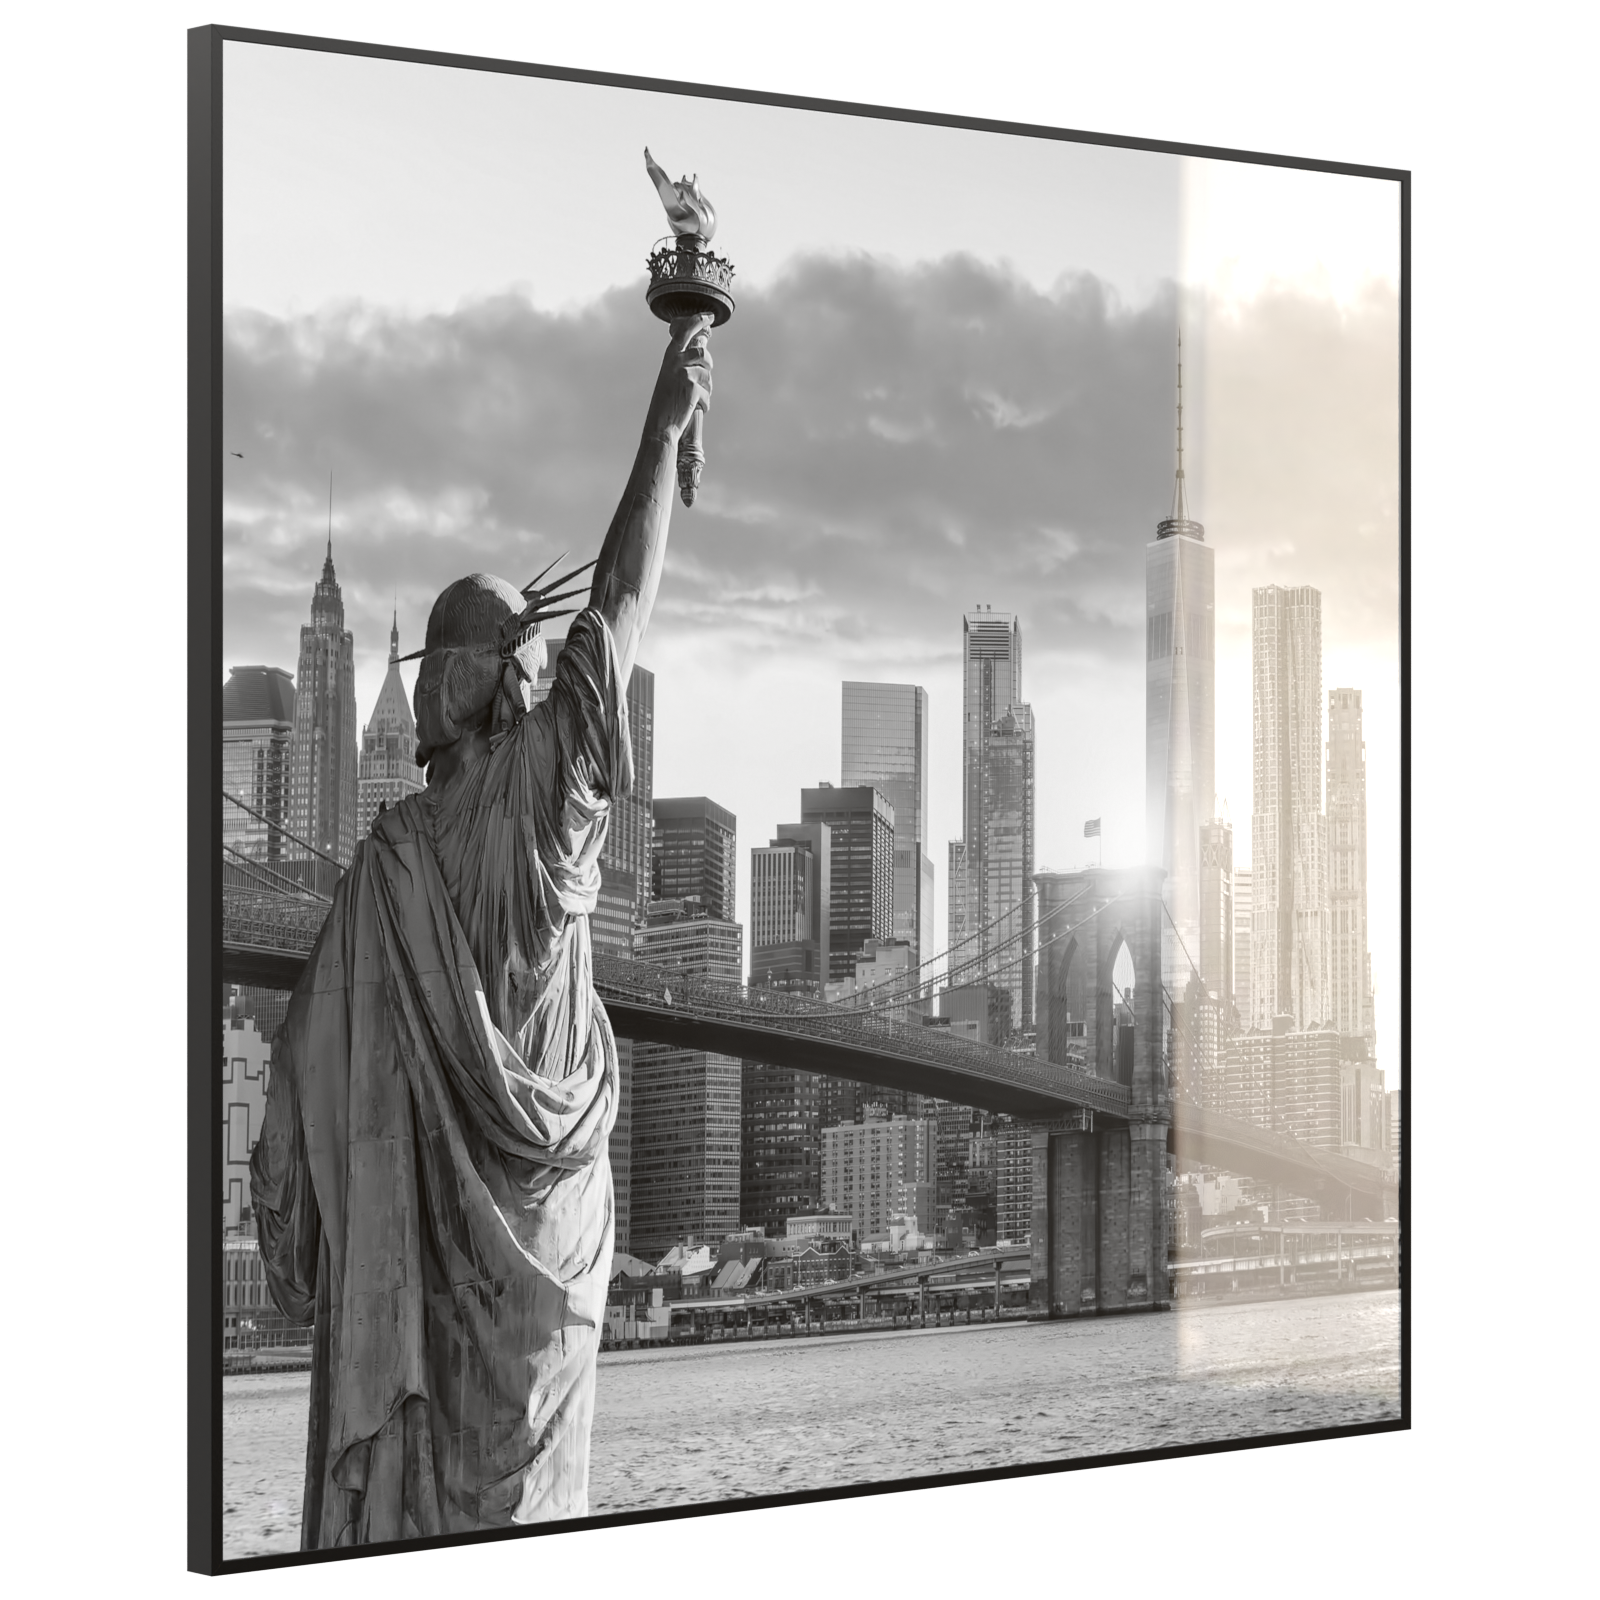 Deko Glas Wandbild Motiv 014 New York Freiheitsstatue